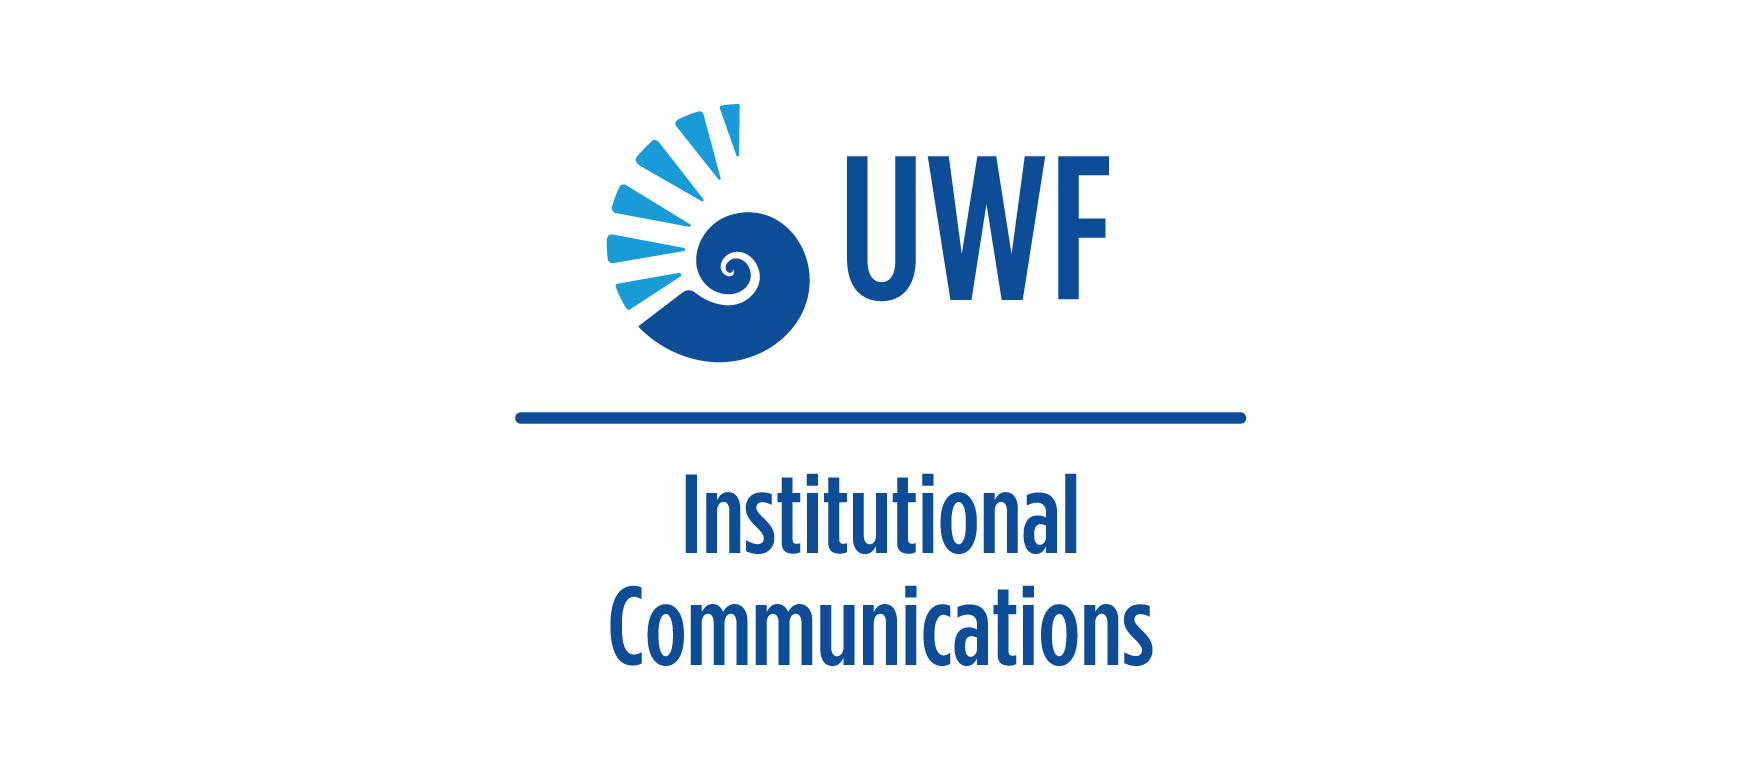 ufw symbol